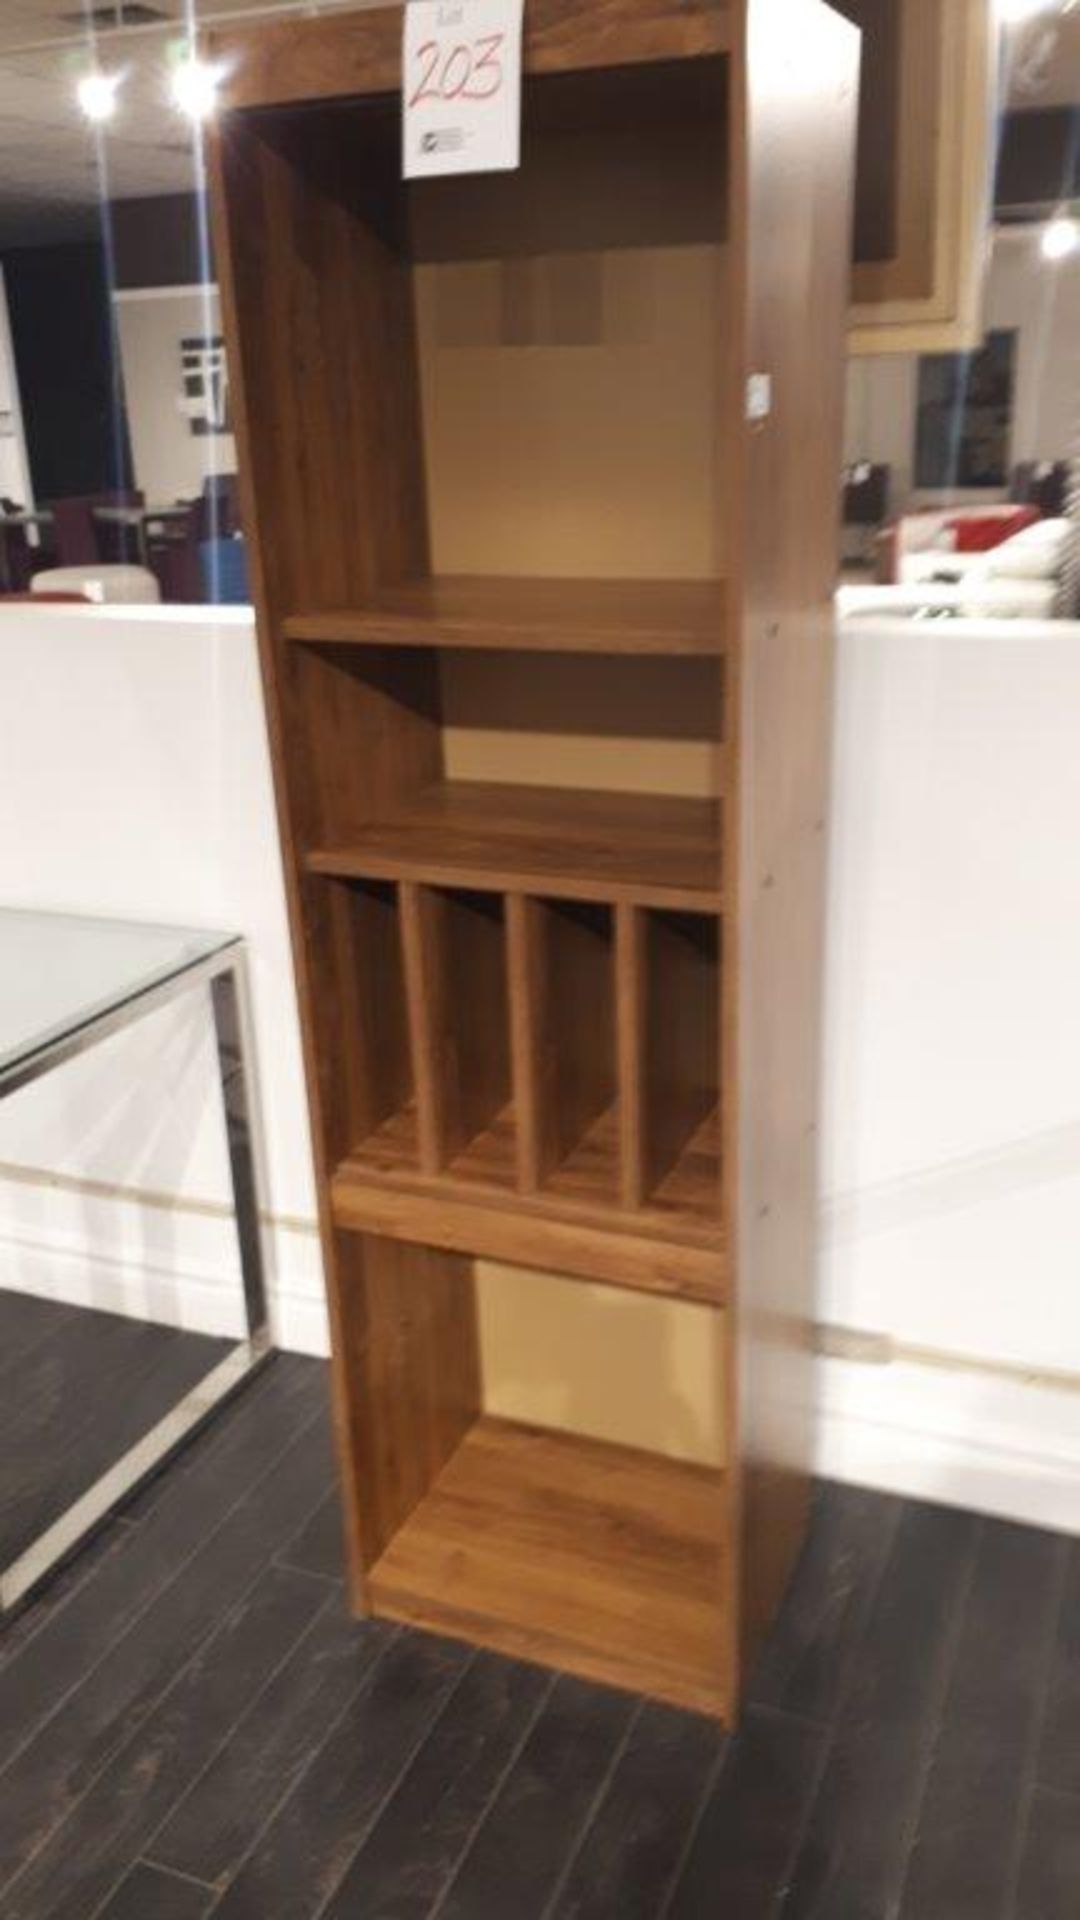 Bookstand unit, 20”x15”x72”